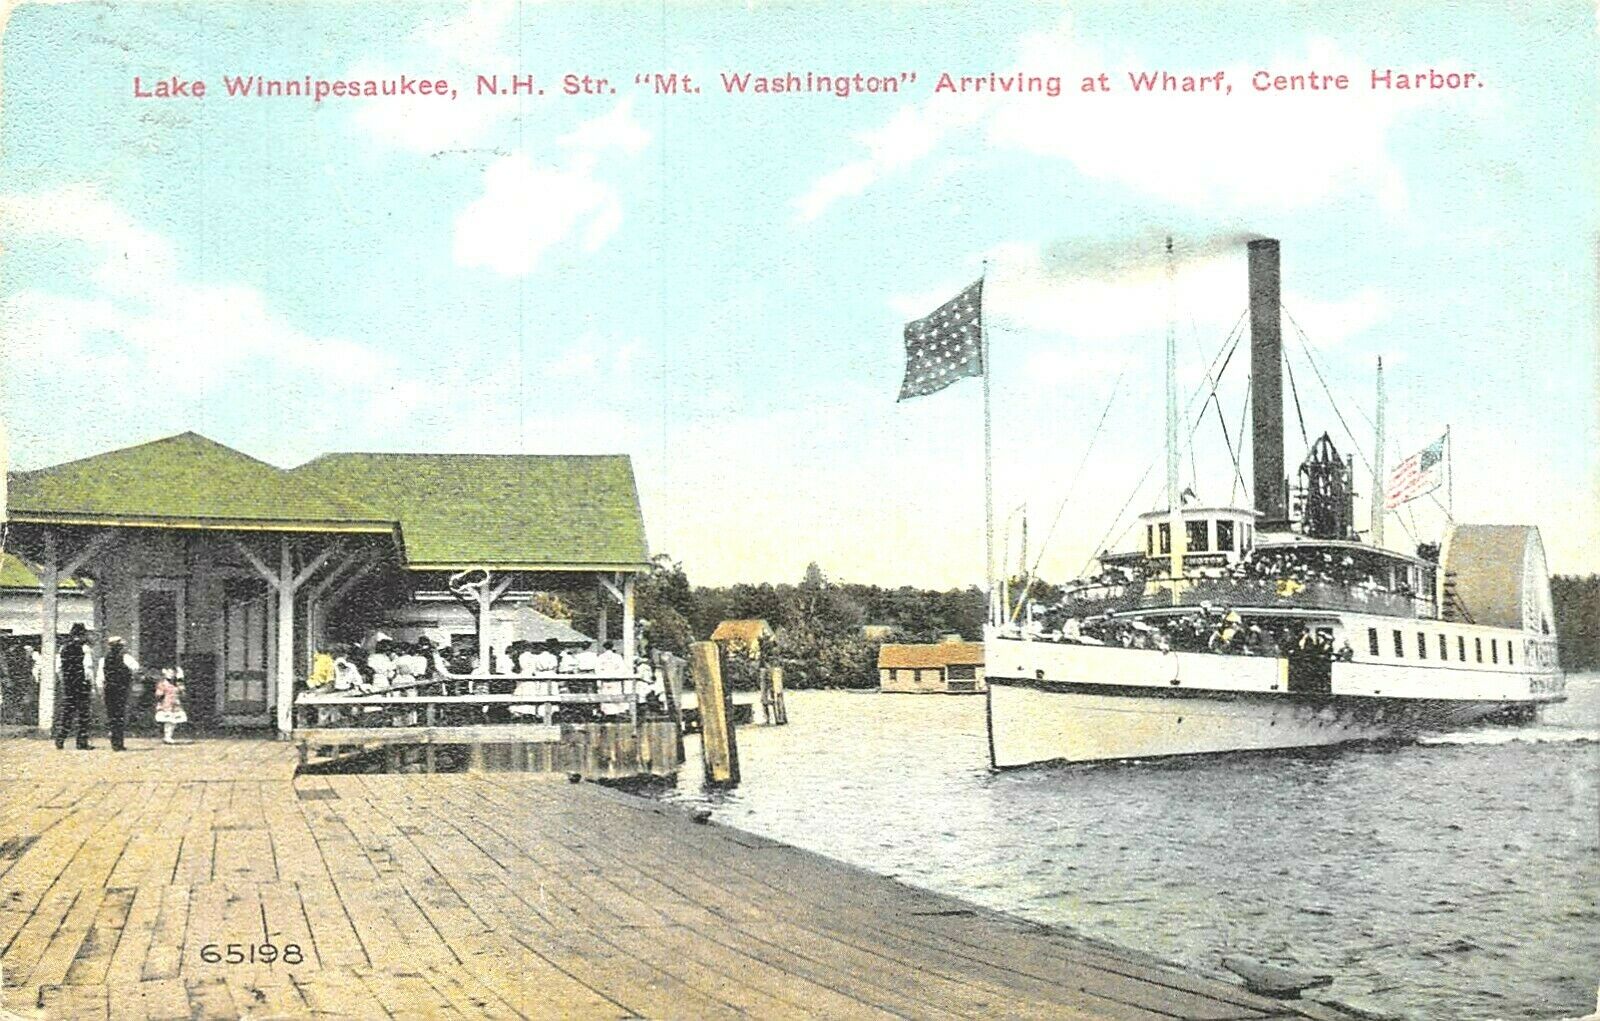 Centre Harbor, Nh On Lake Winnipesaukee, "mt. Washington" Arriving   1911